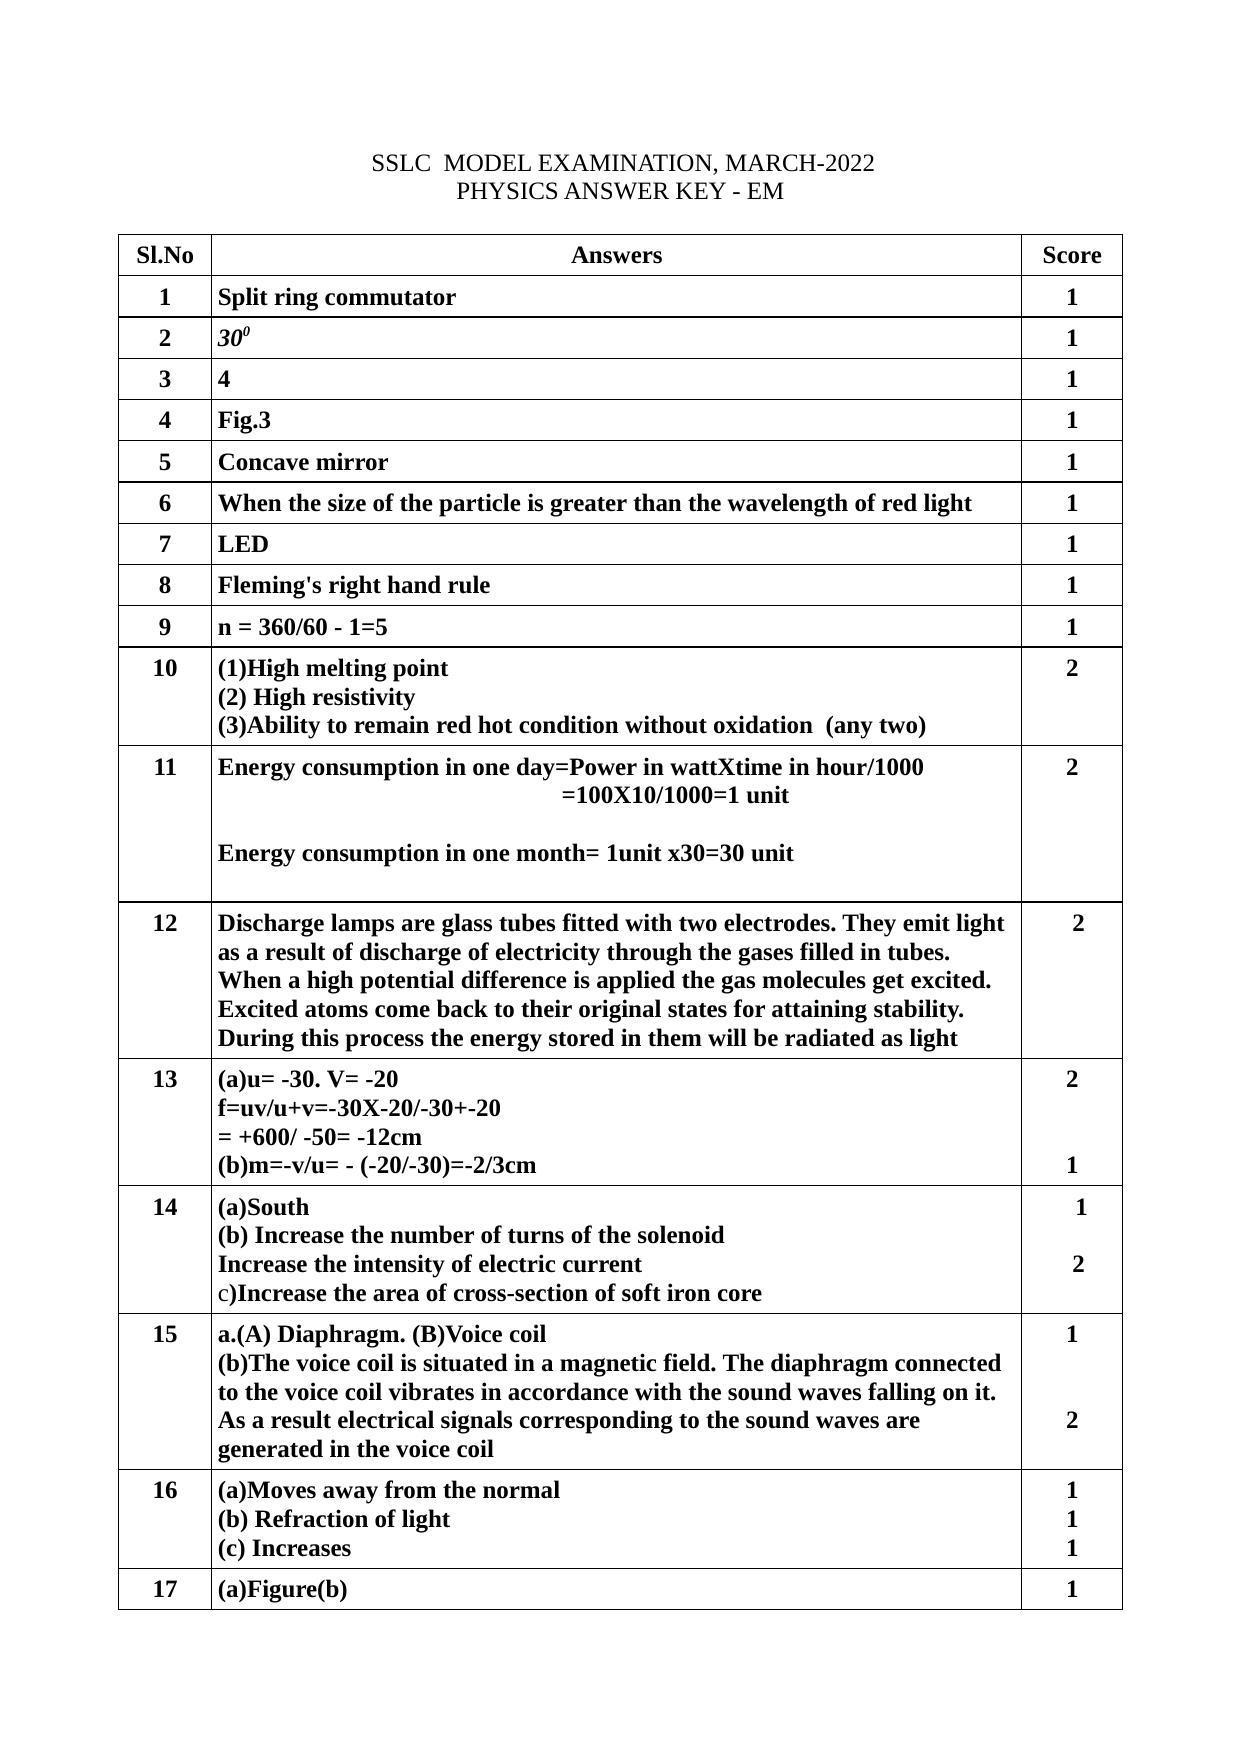 Kerala SSLC 2022 Physics (EM) Answer Key (Model) - Page 1